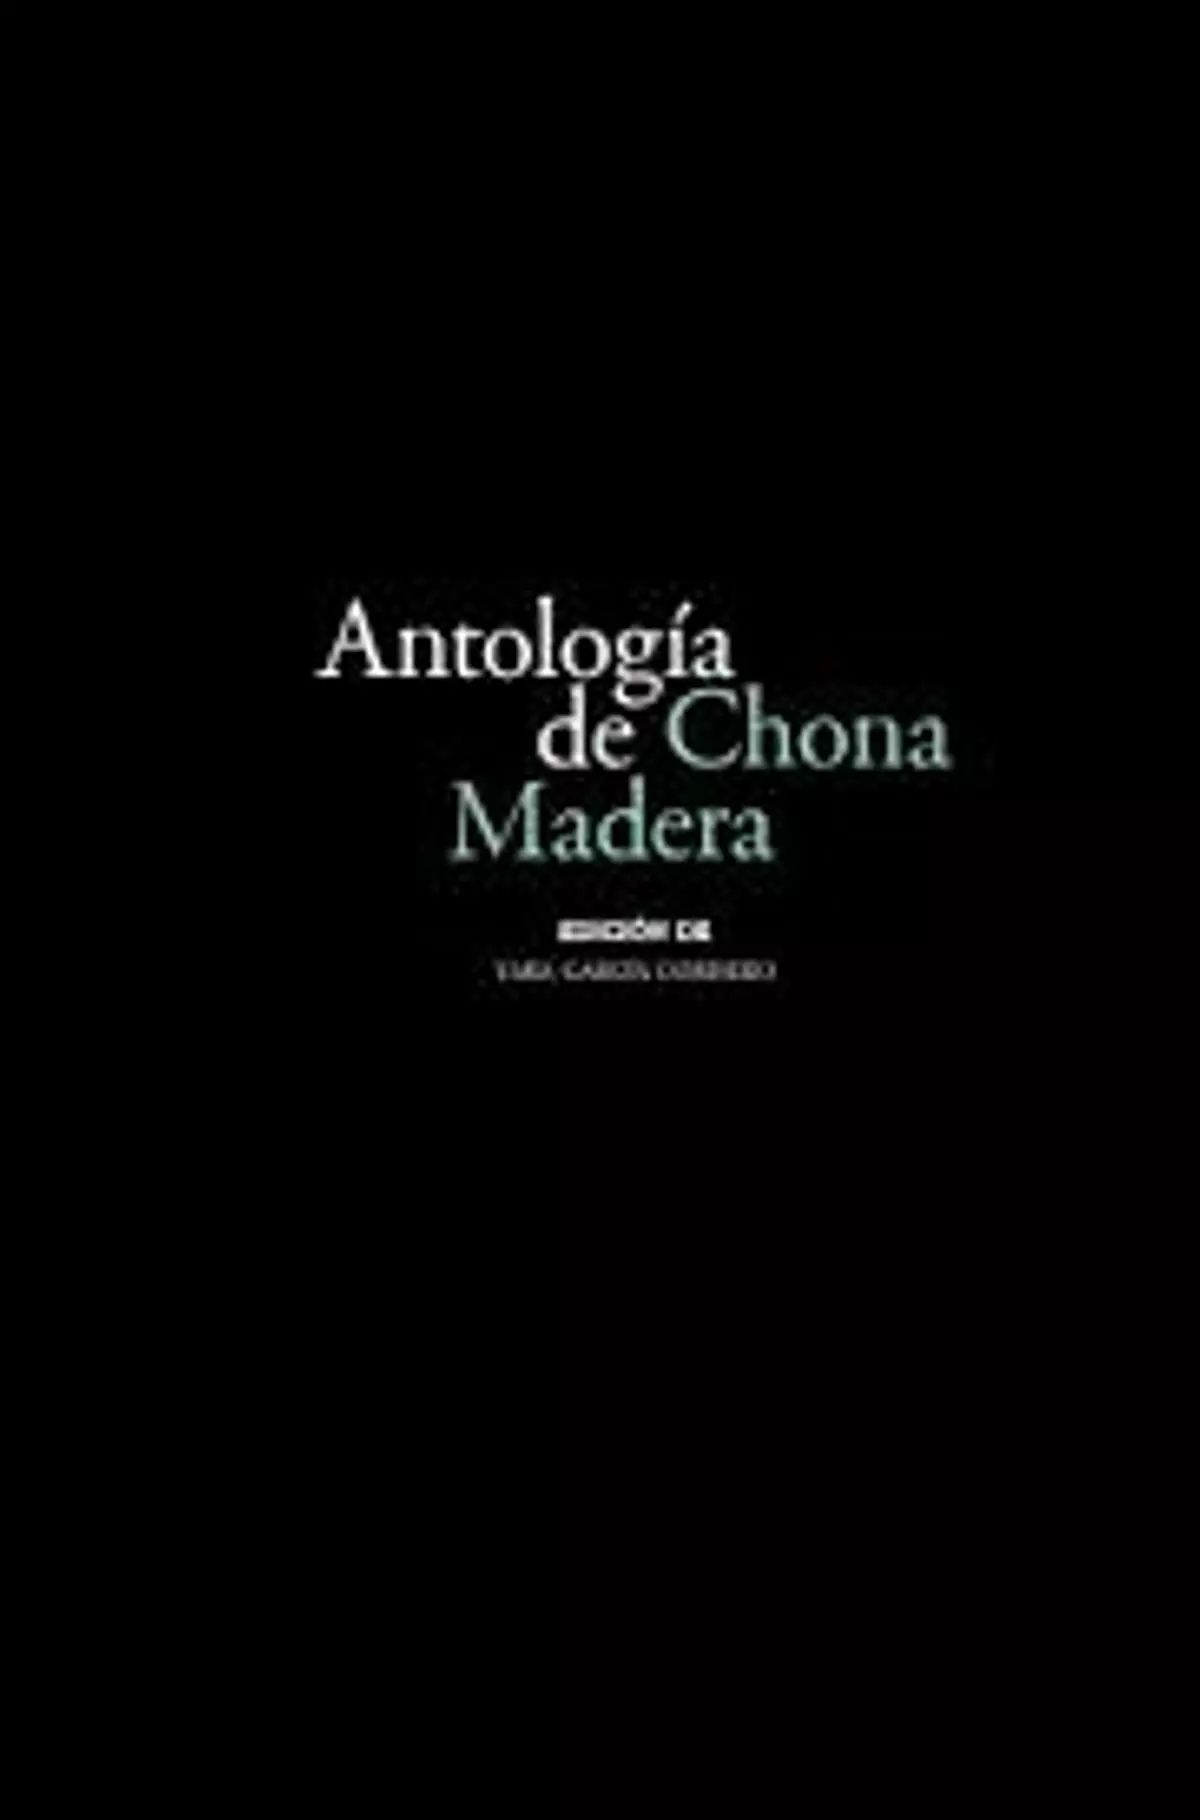 Chona Madera